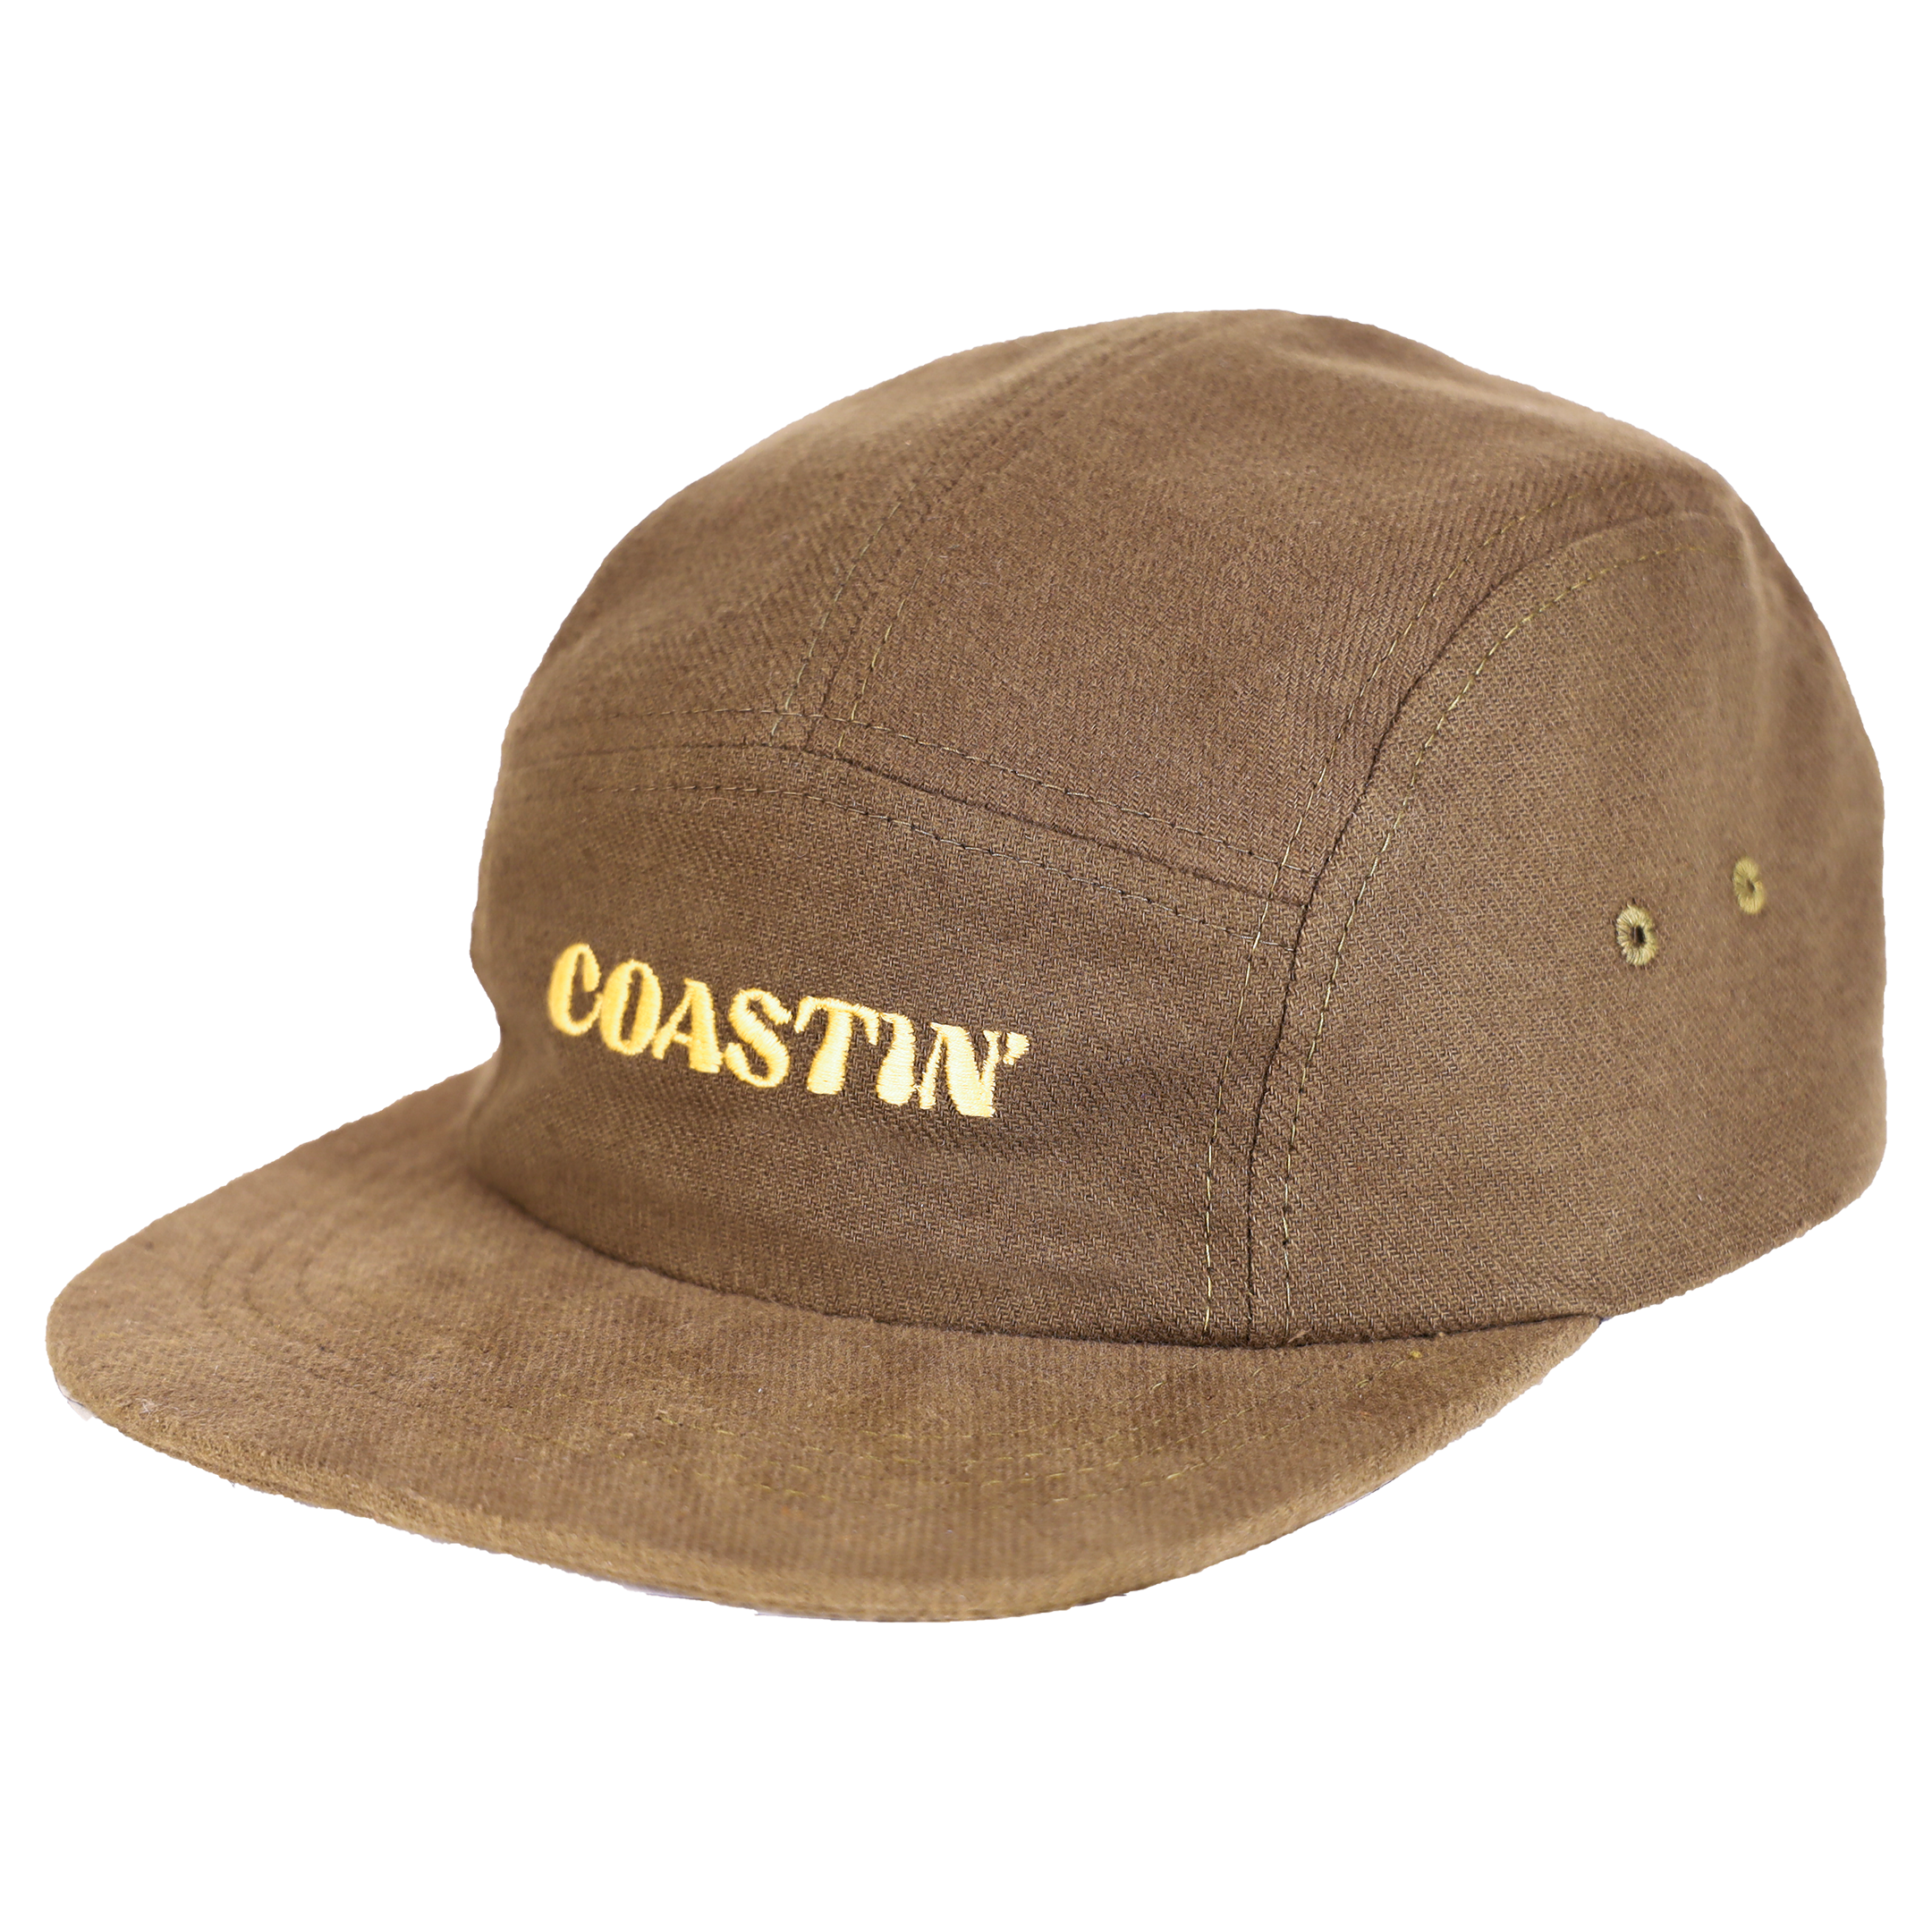 Coastin' Organic Cotton Camp Cap: Navy